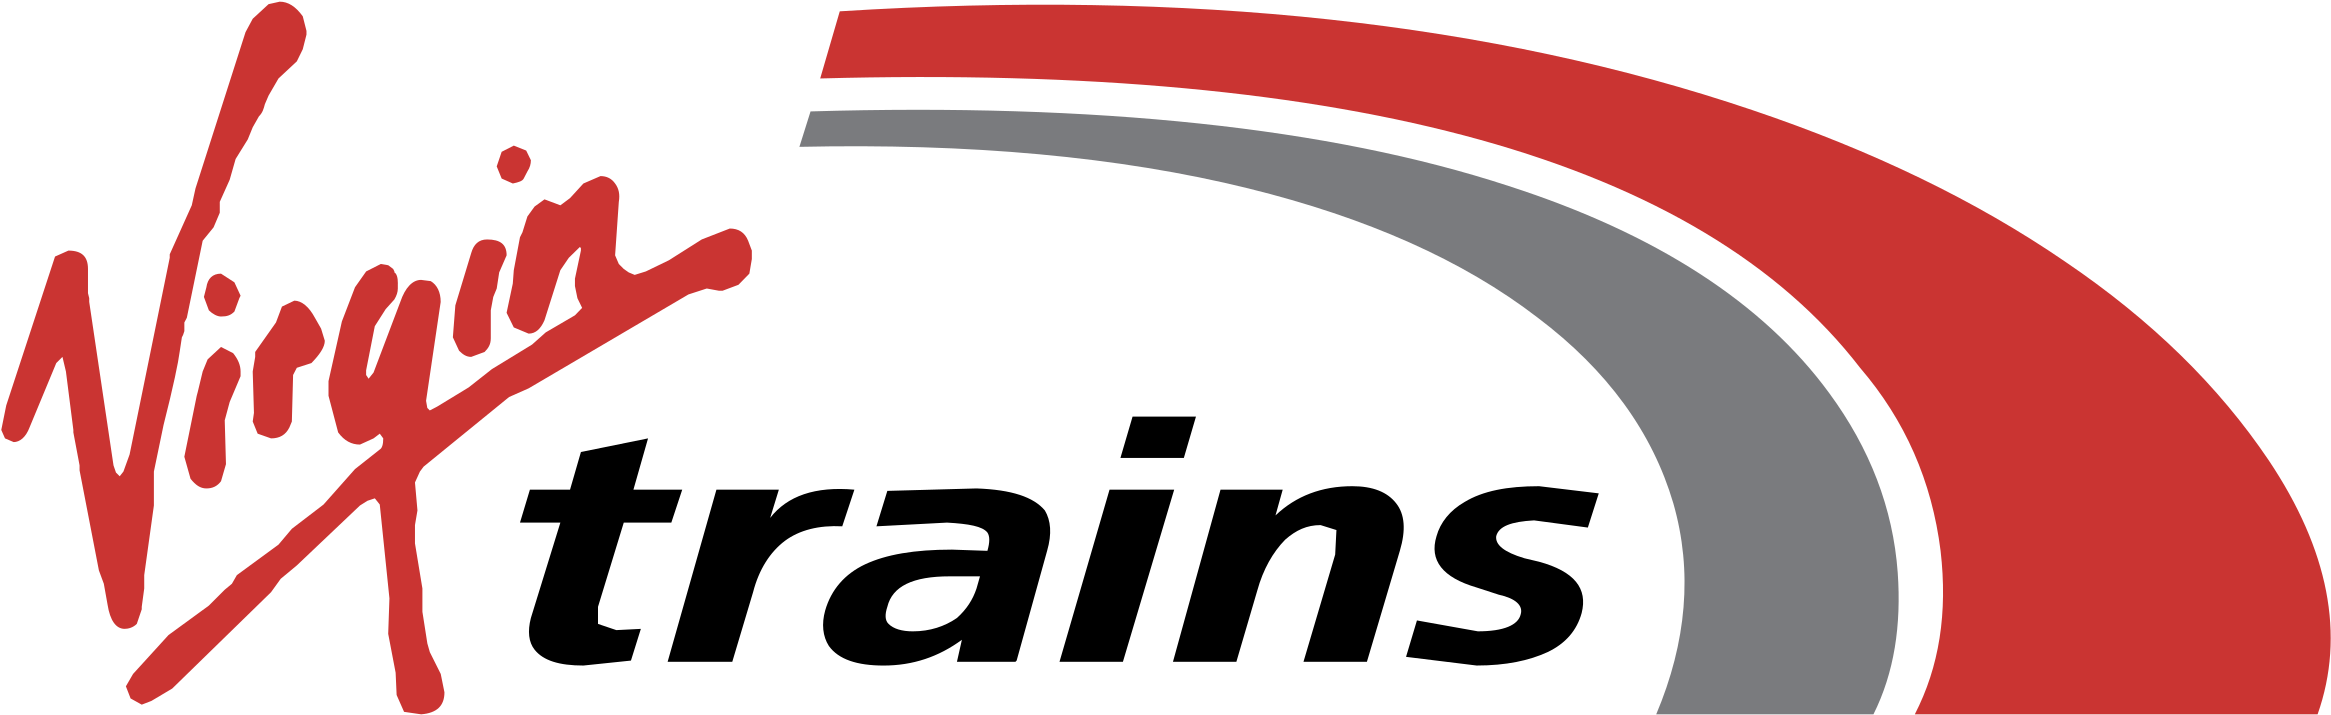 Virgin Trains Logo Png Transparent - Virgin Trains Logo Png Clipart (2400x2400), Png Download